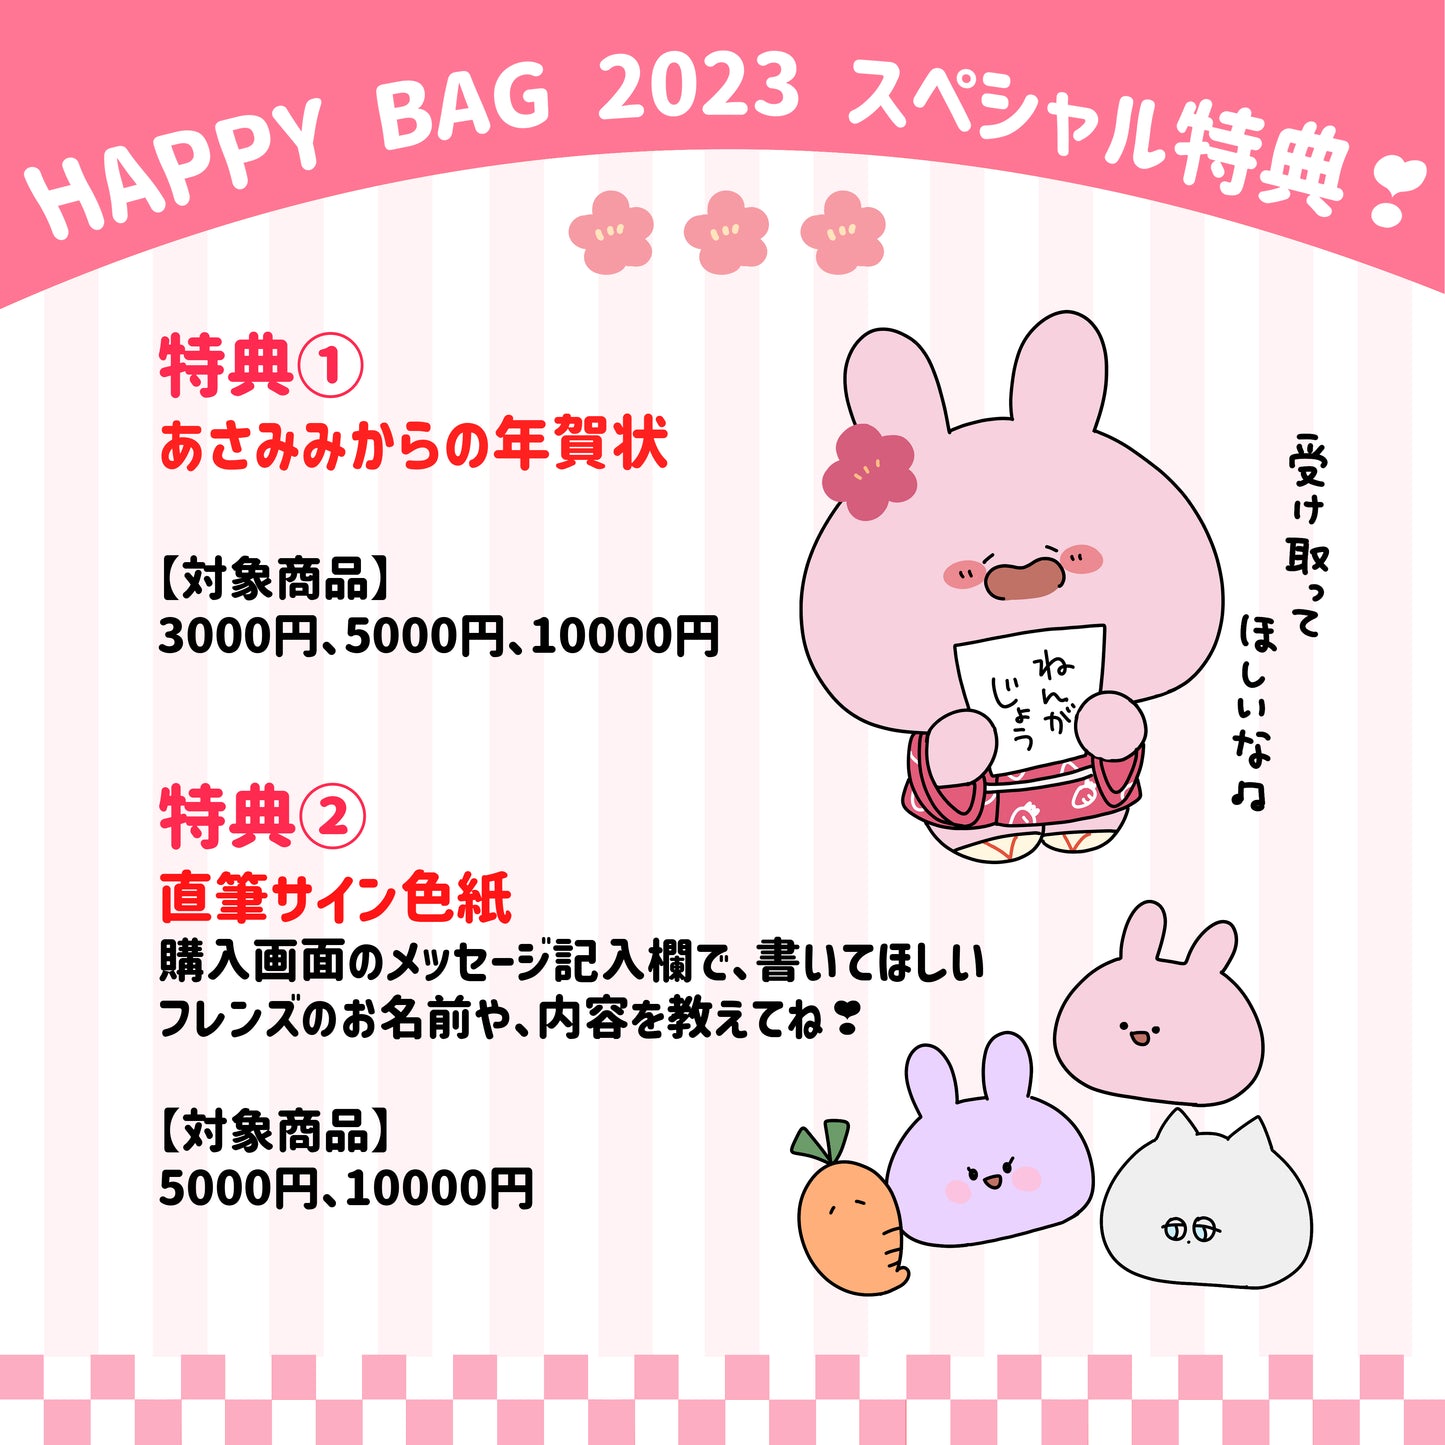 [Asamimi-chan] ASAMIMI HAPPY BAG (¥10,000)